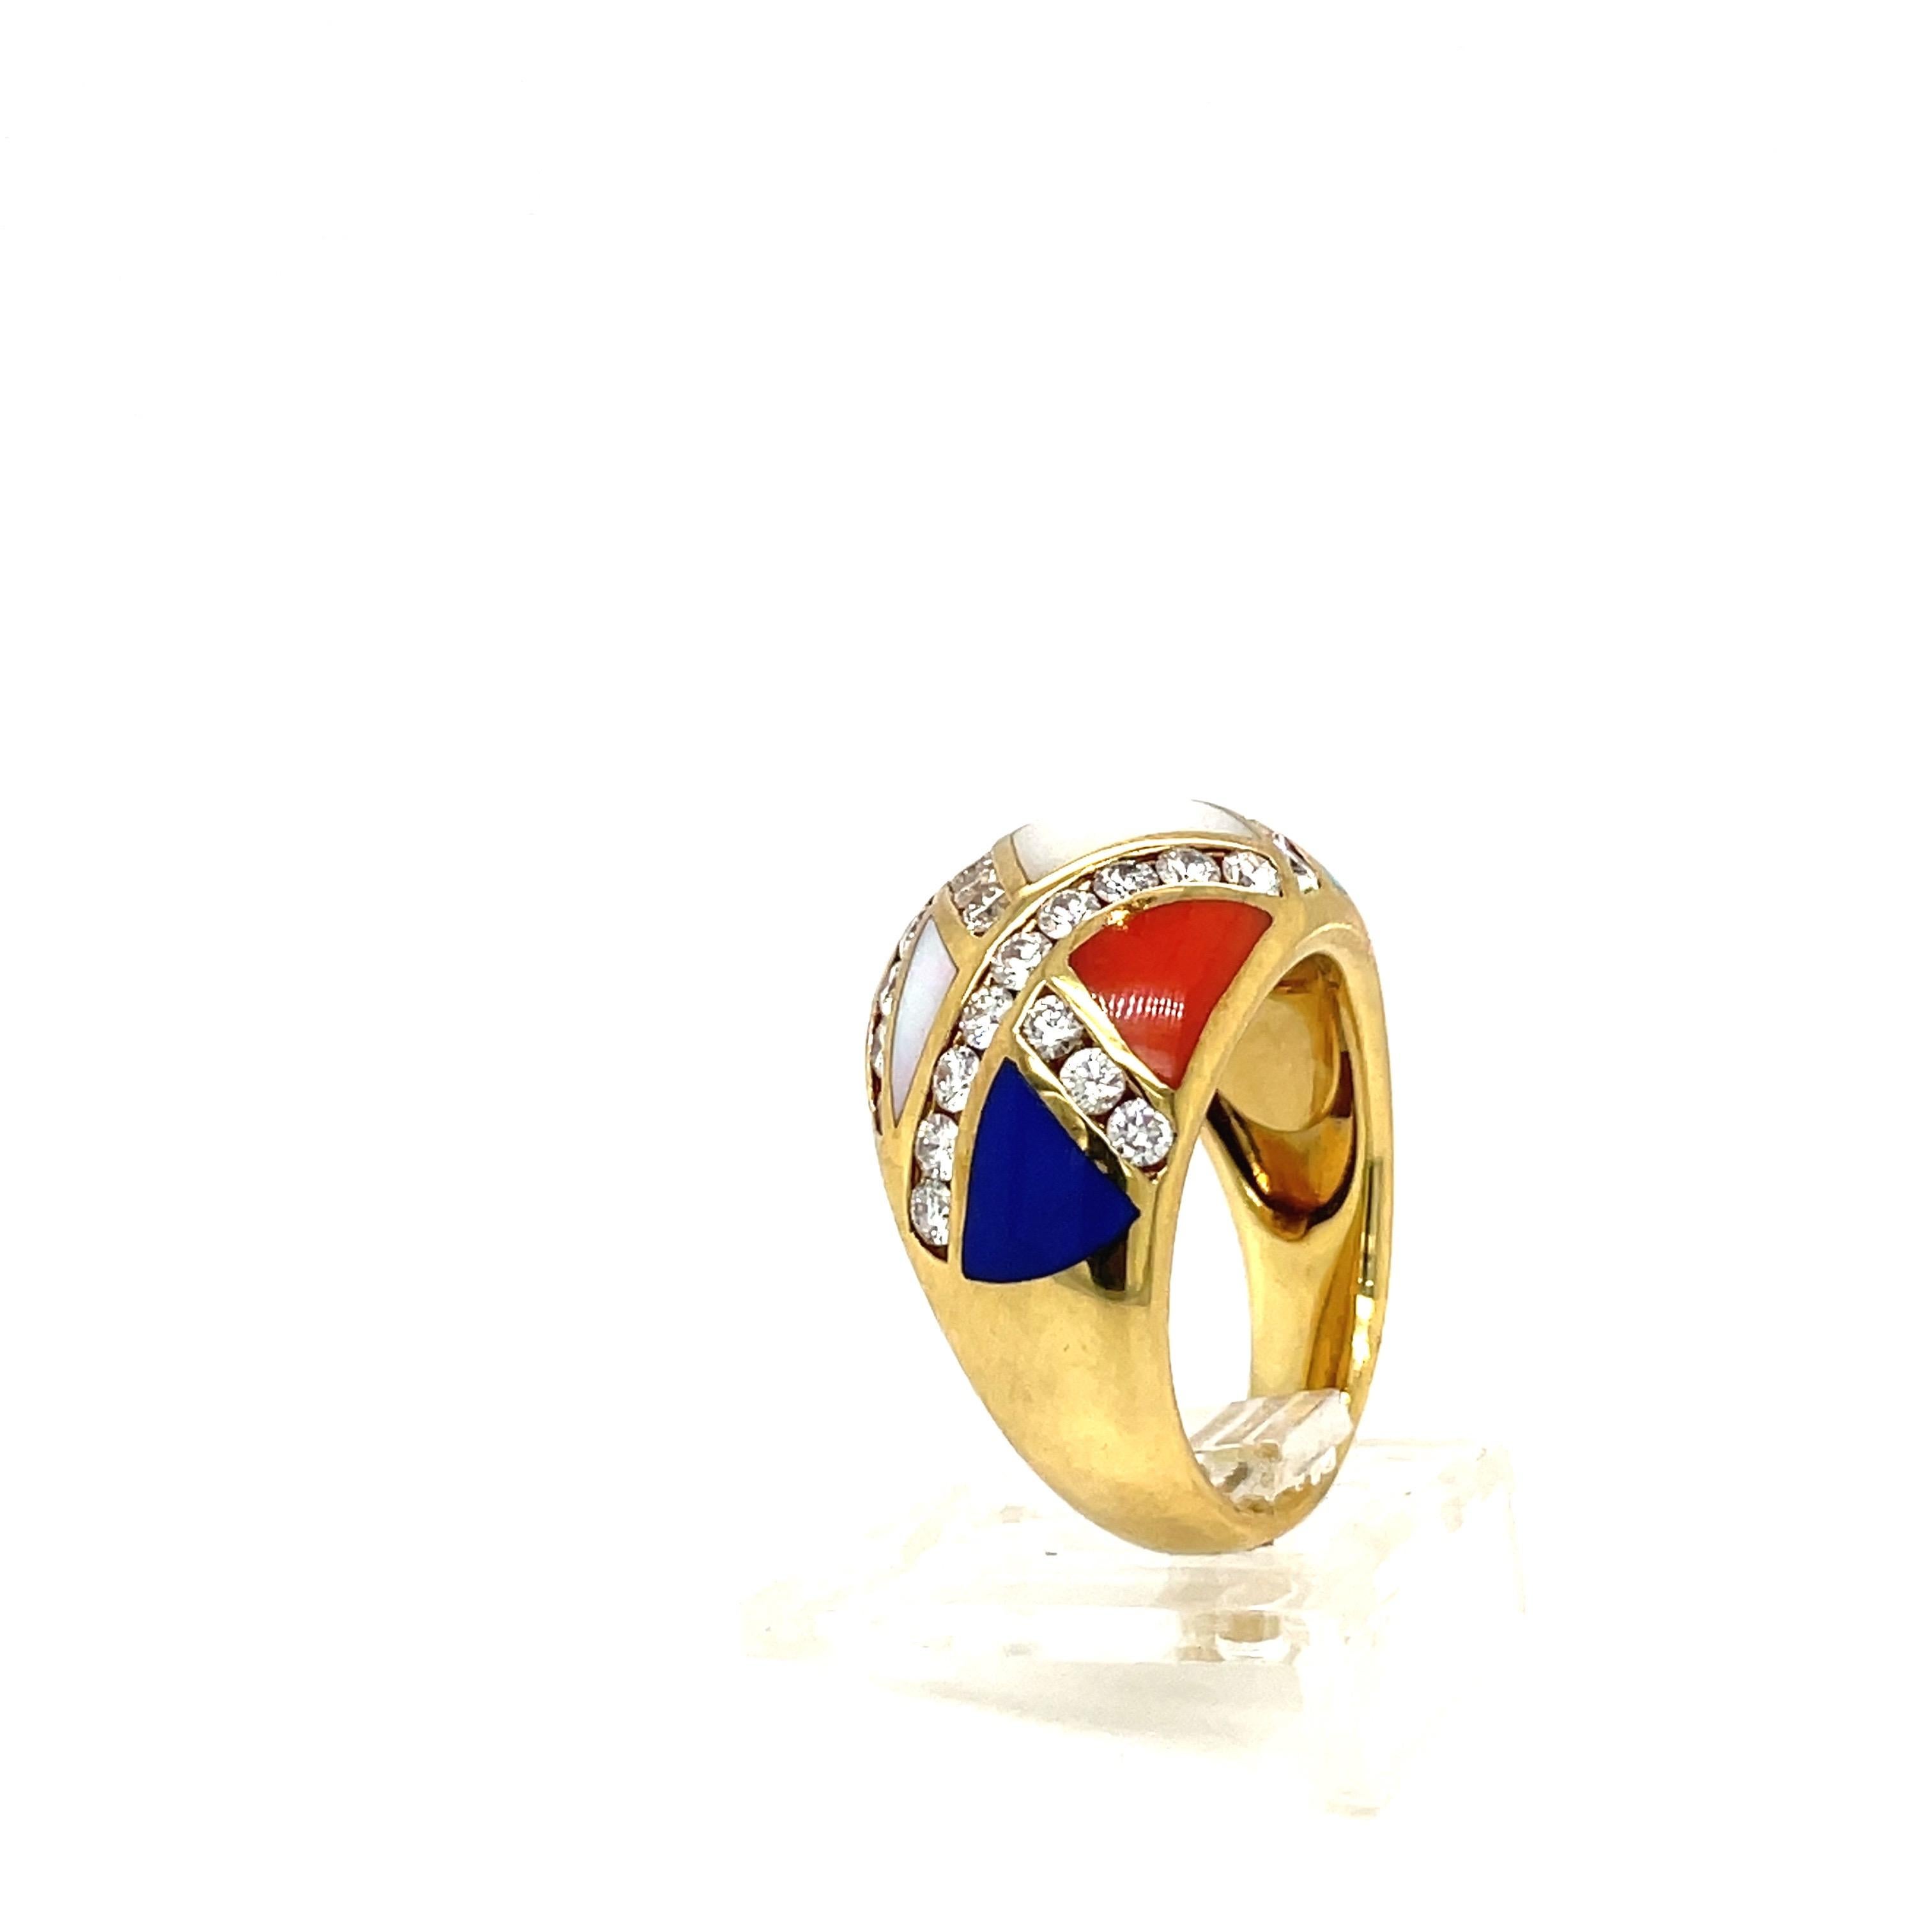 Asch Grossbardt 18KT YG Diamond 1.00Ct. & Inlaid  Semi Precious Stones Dome Ring For Sale 2